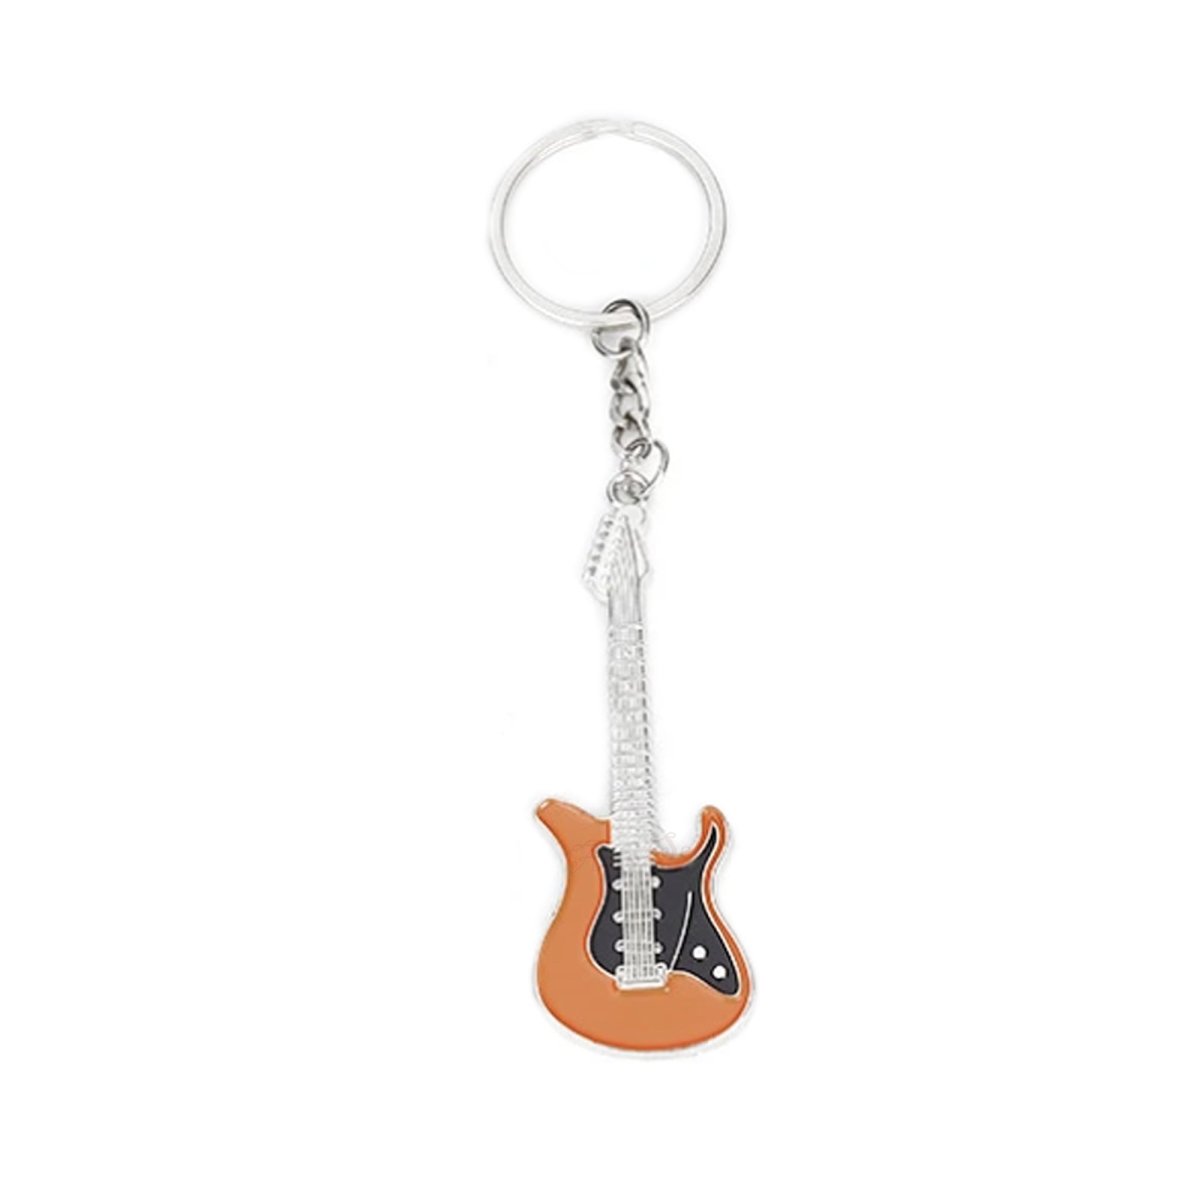 30mm Keyring Guitar Keychain 7.5cm Key Ring Key Chain Bag Accessory Holder Pendant Tag - Orange - - Asia Sell